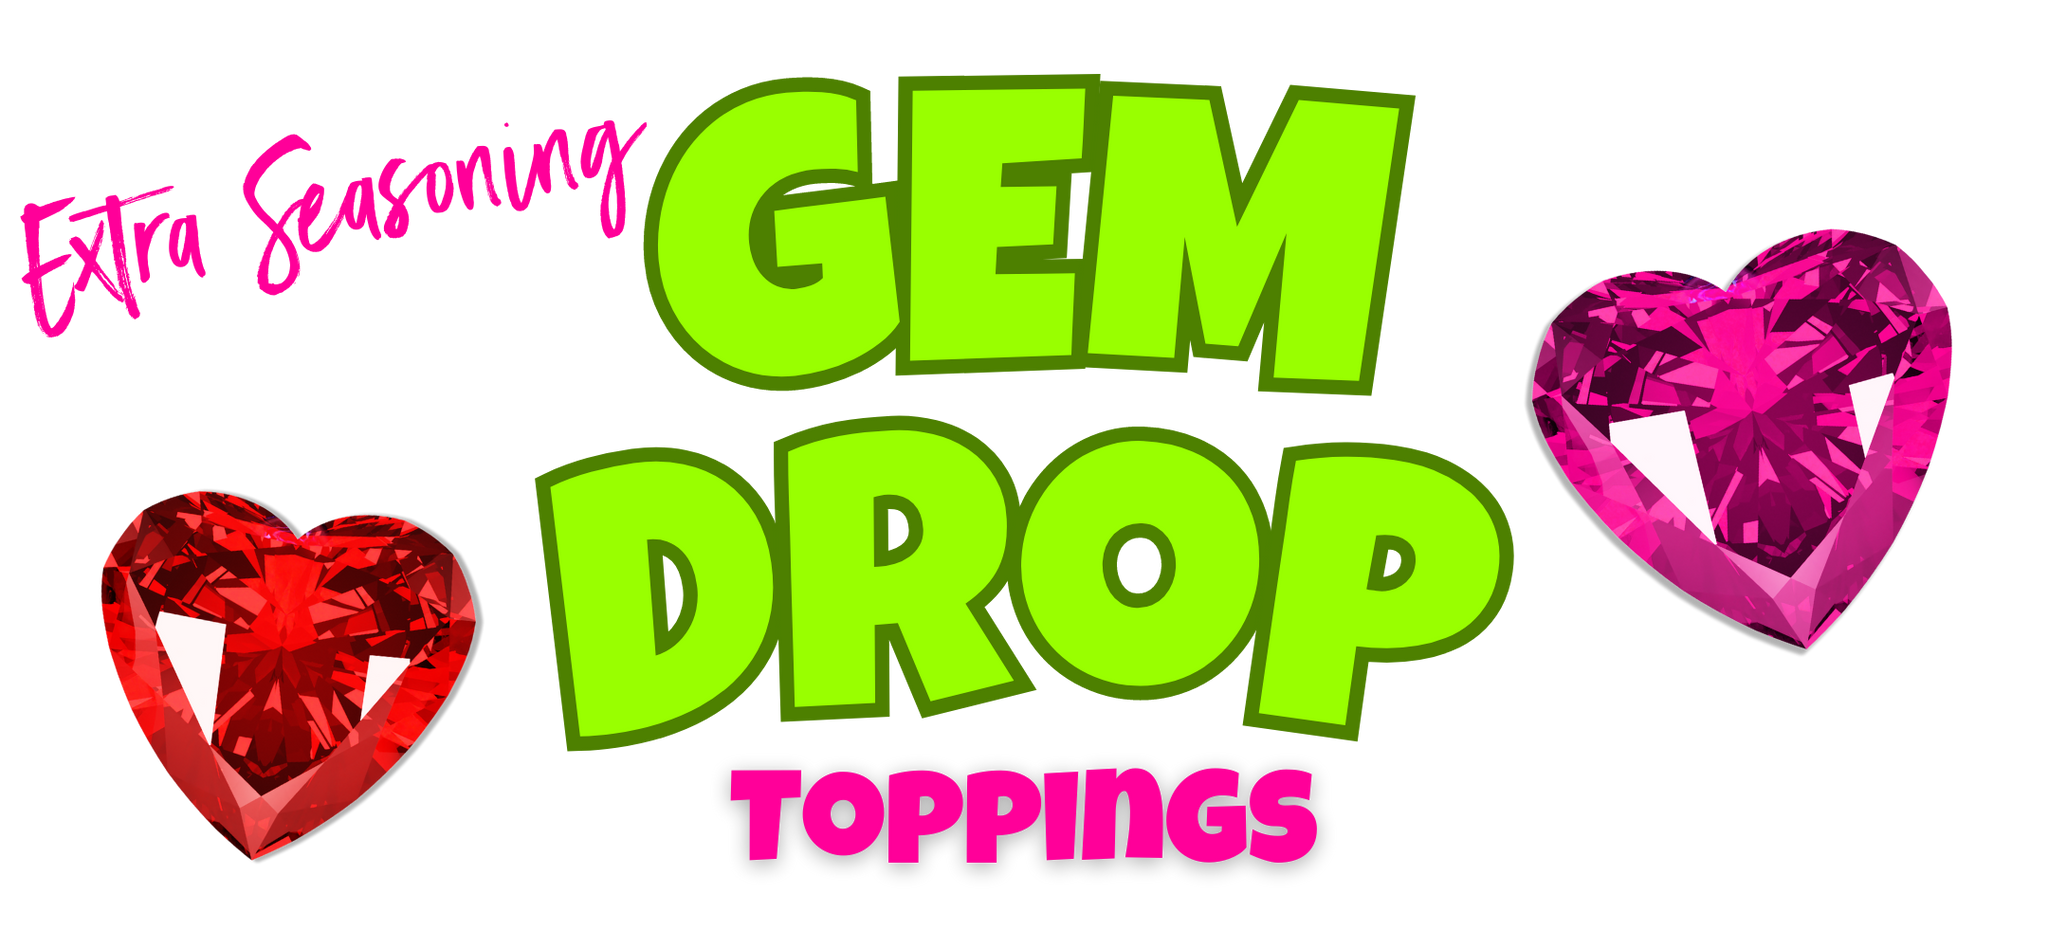 Gem Drop Title with gem graphics